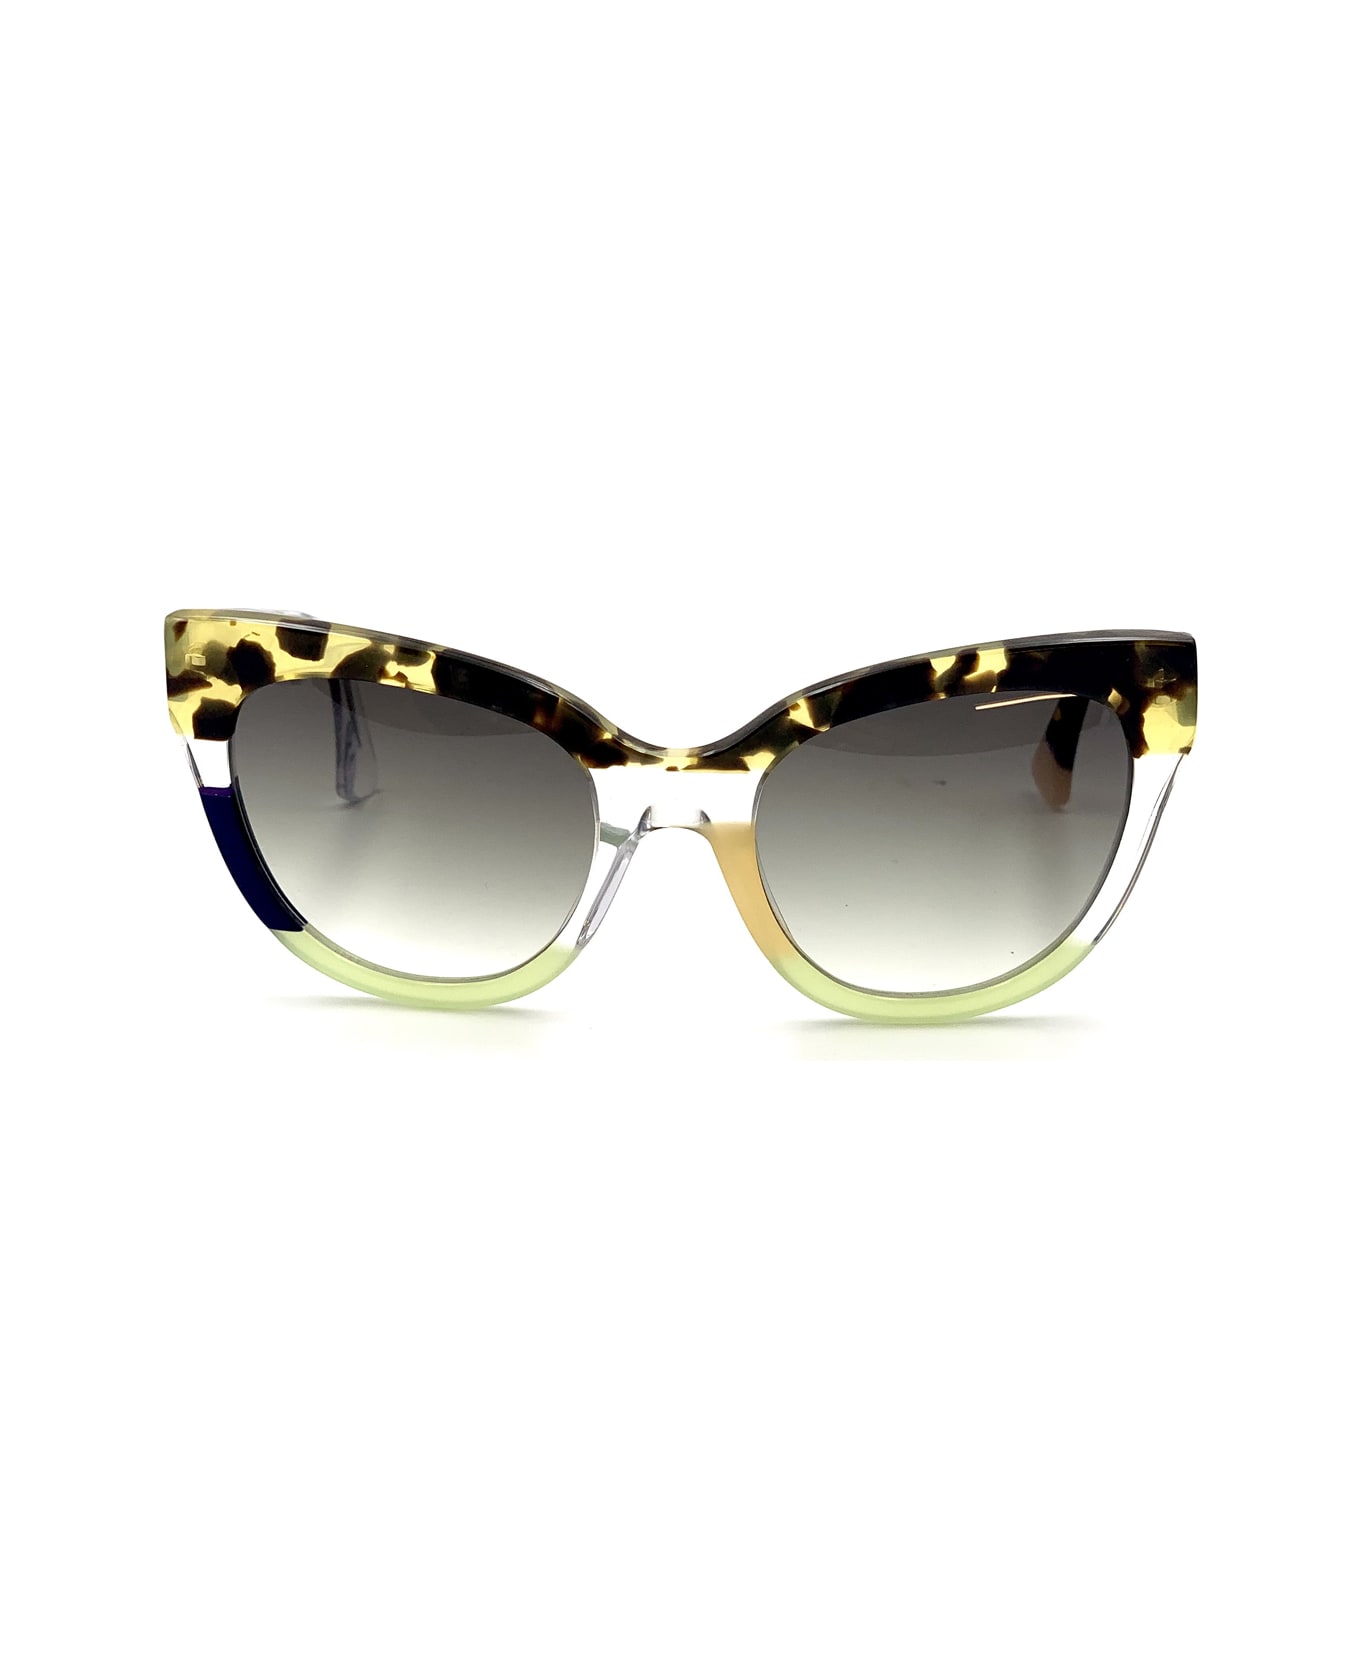 Silvian Heach Twink Pheach Work Sunglasses - Multicolore サングラス